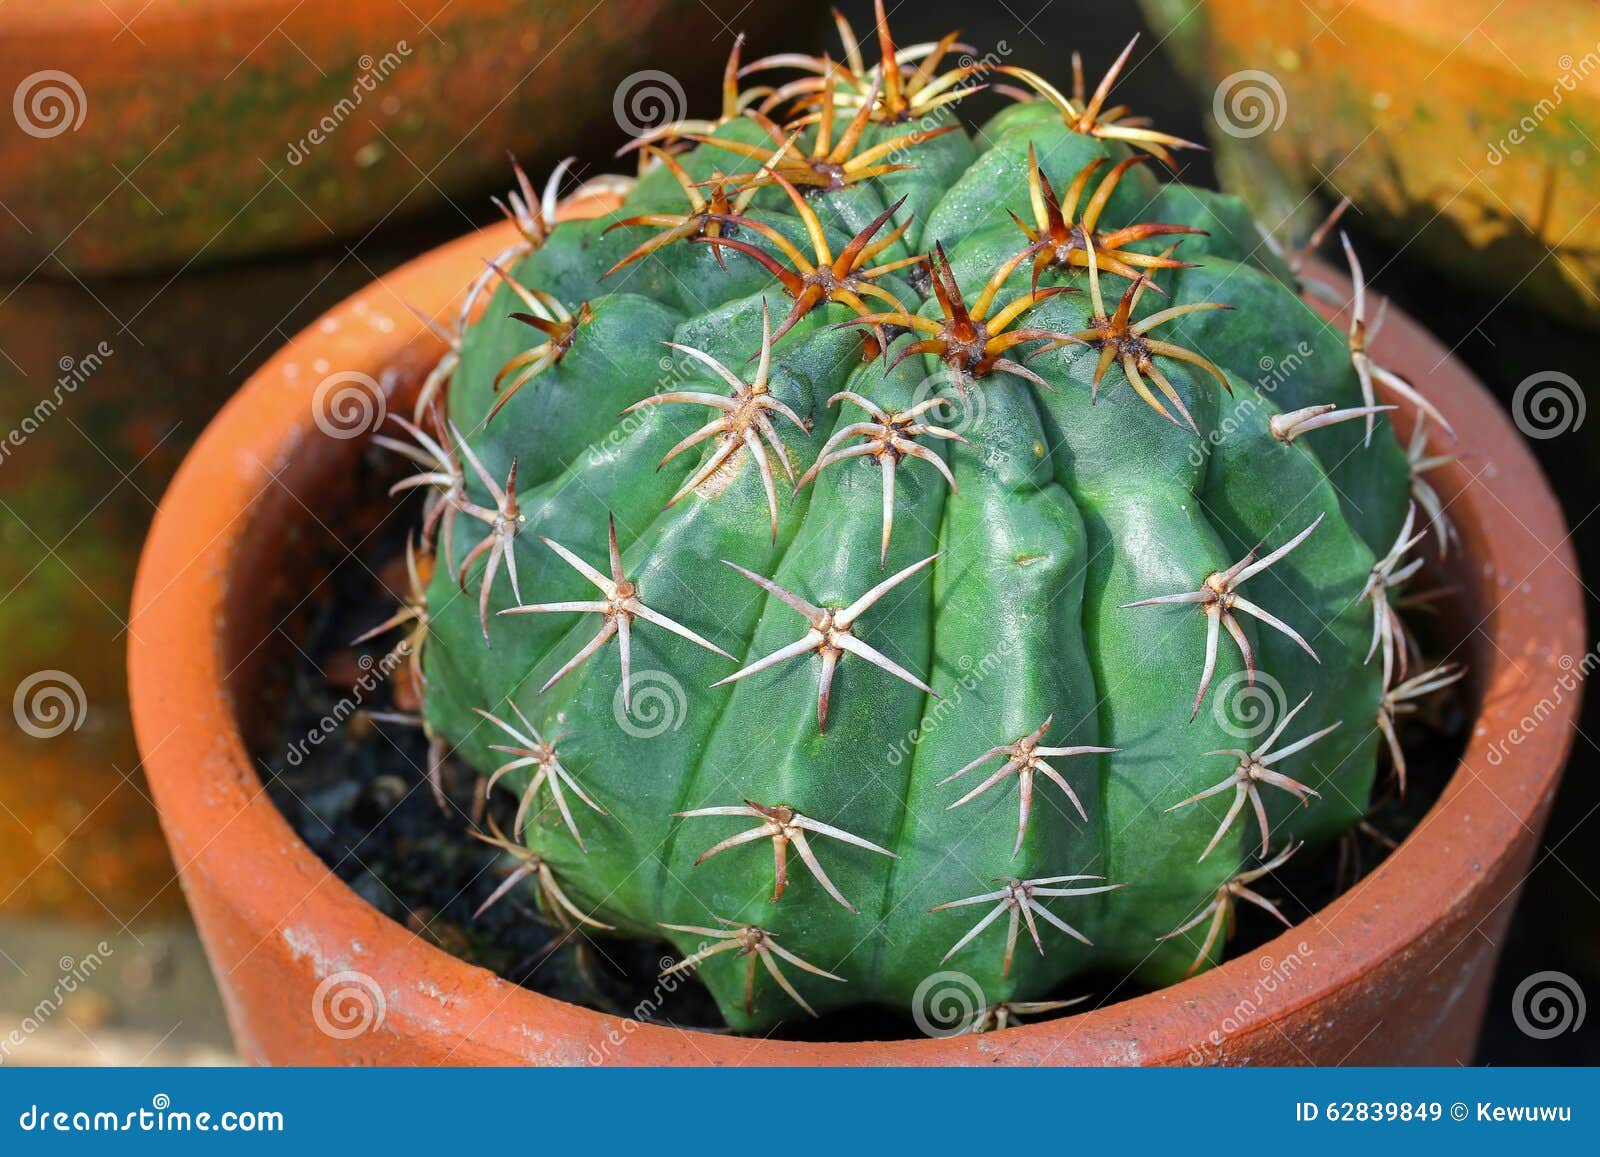 gymnocalycium cactus with thick spider spines